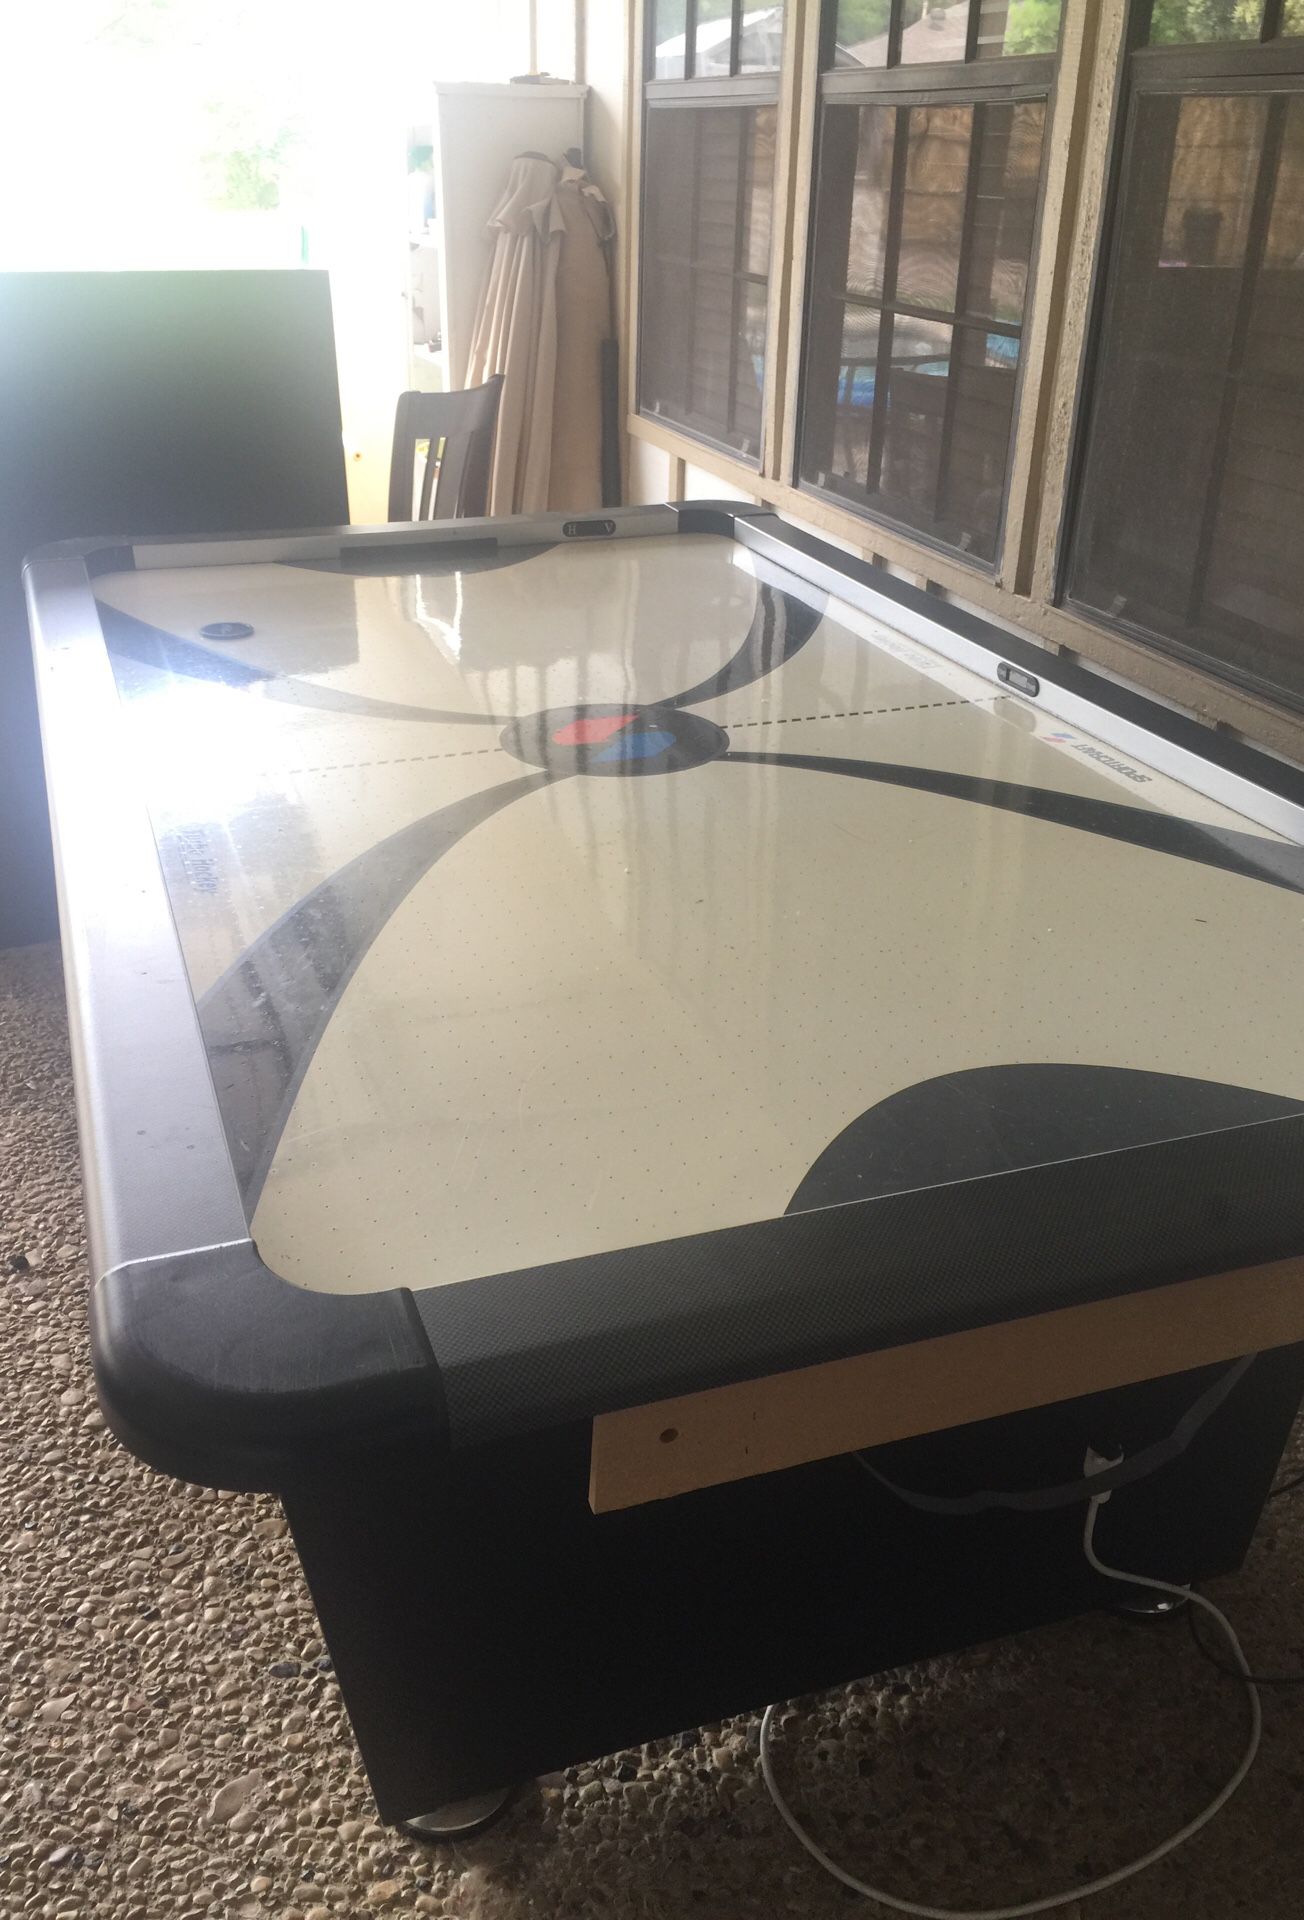 Full size air hockey table